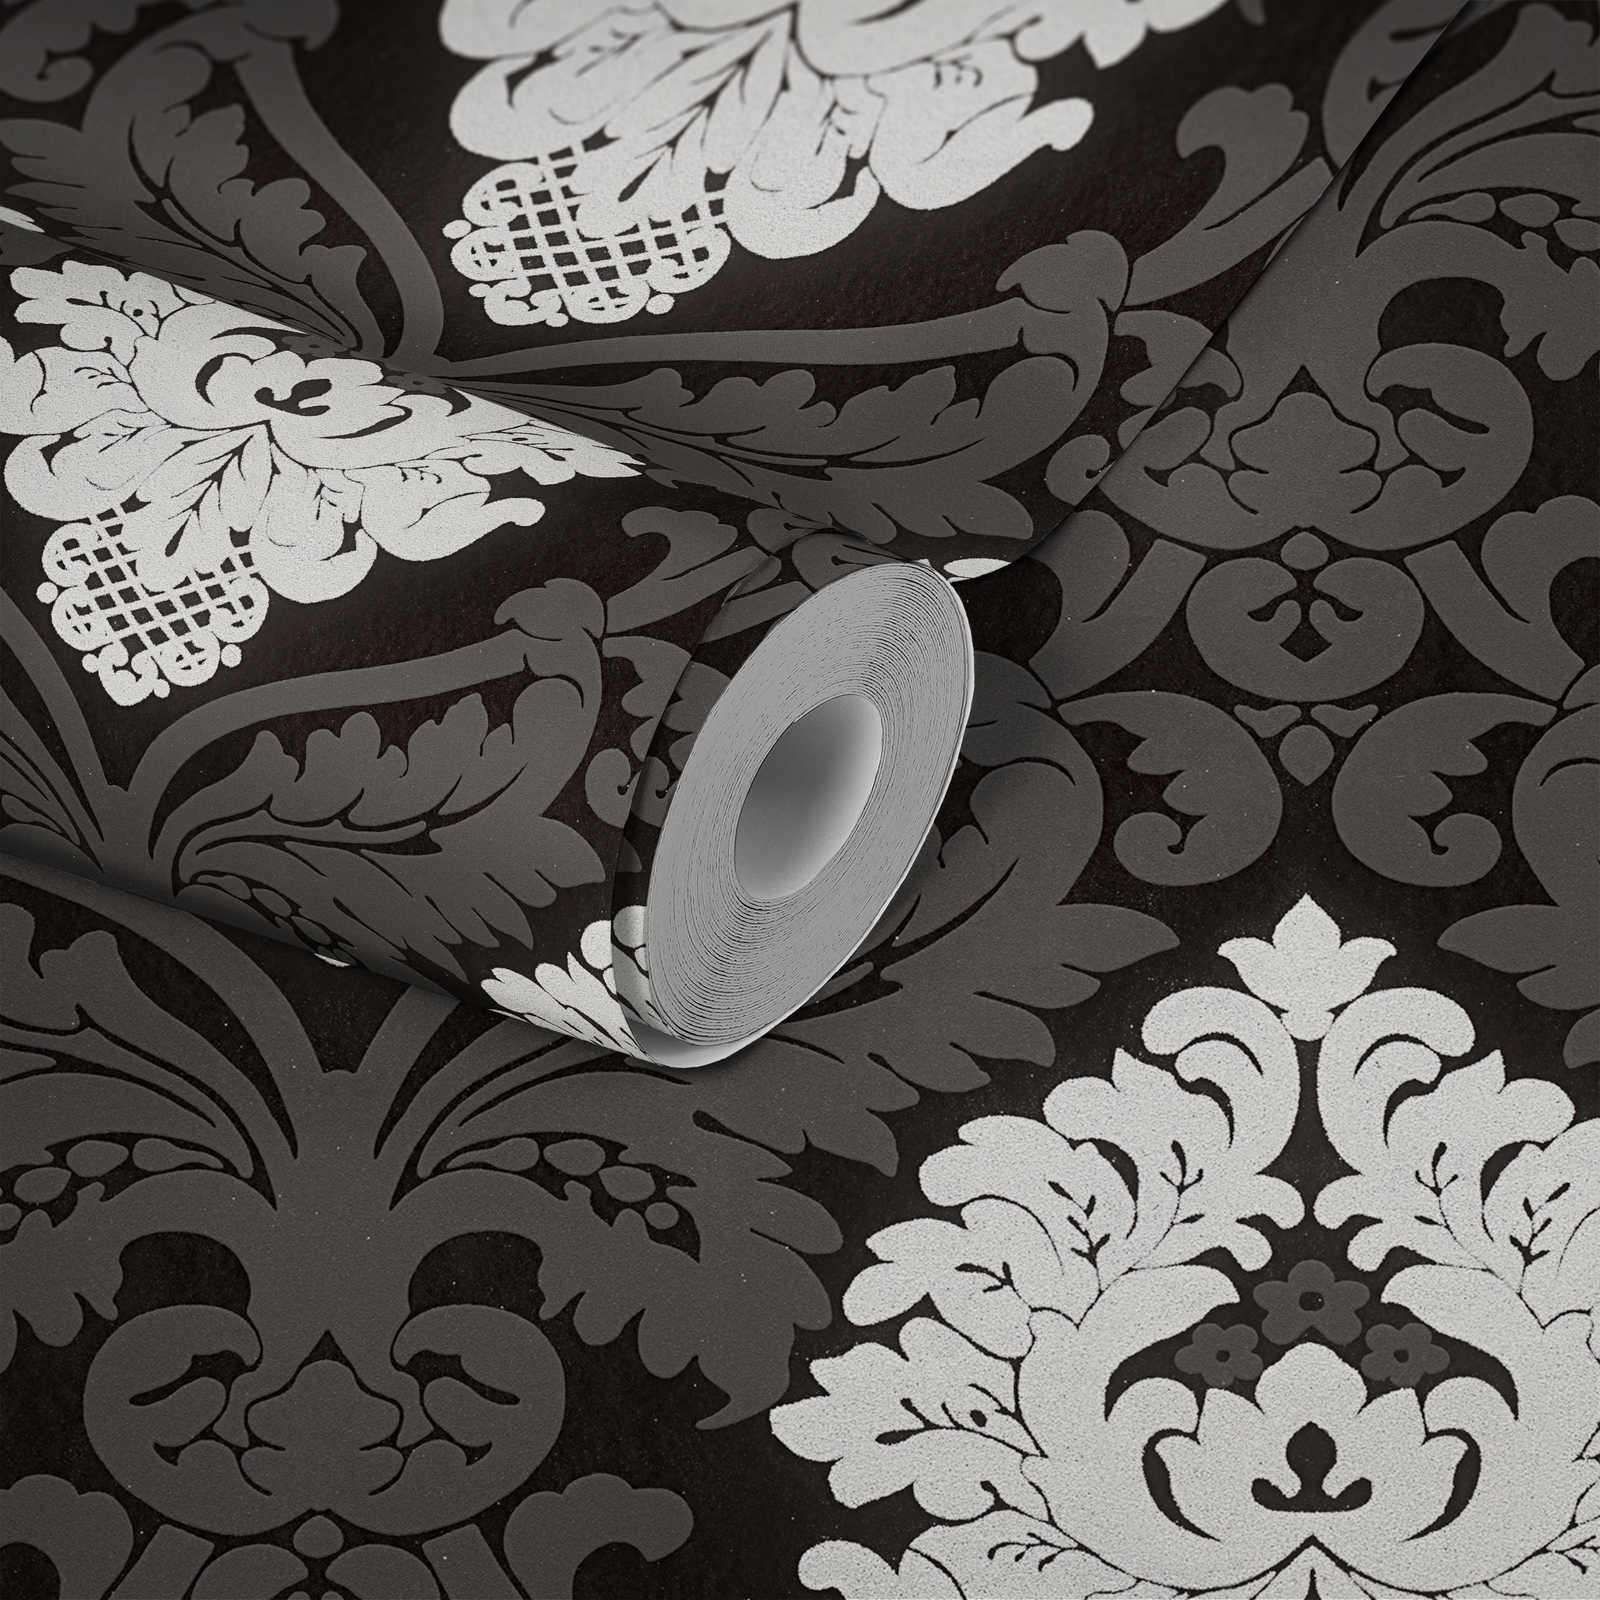             Ornamenteel behang glitter effect & 3D effect - zwart, zilver, wit
        